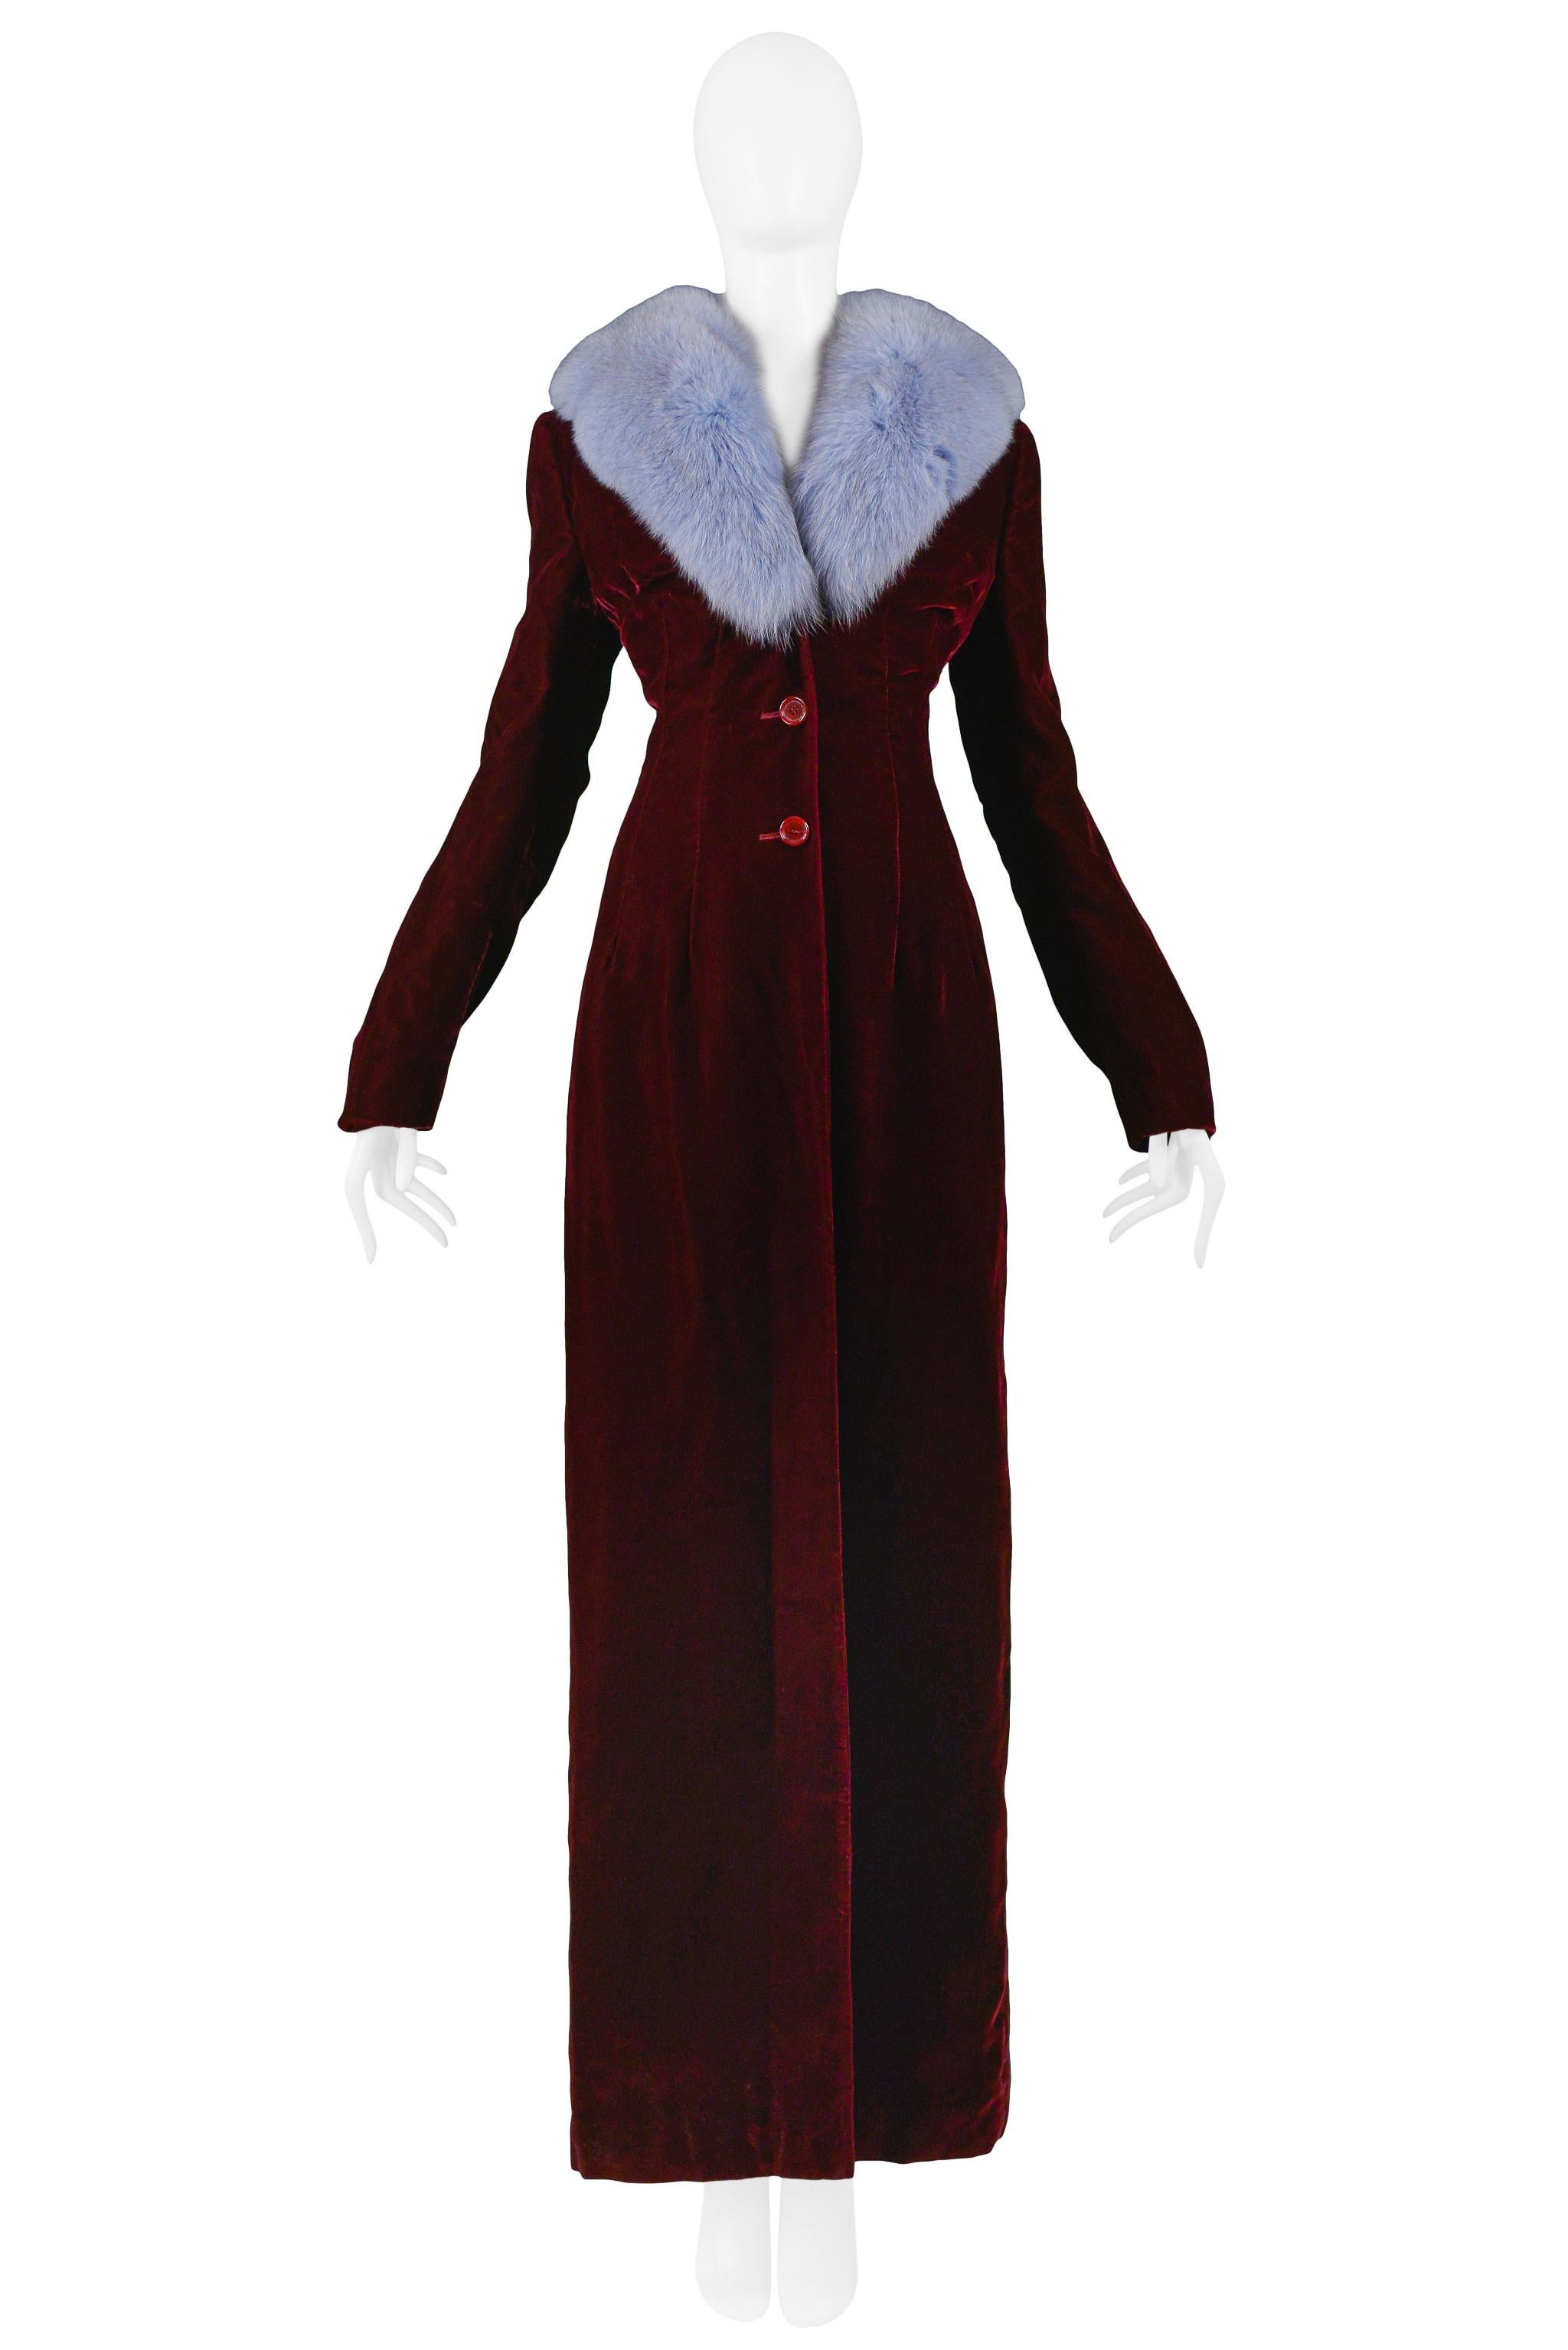 Vintage Dolce & Gabbana burgundy velvet long coat featuring a periwinkle blue fur collar and center front button closure. Collection 1997.

Excellent Vintage Condition.

Size 42.
 
Measurements: Shoulder 16